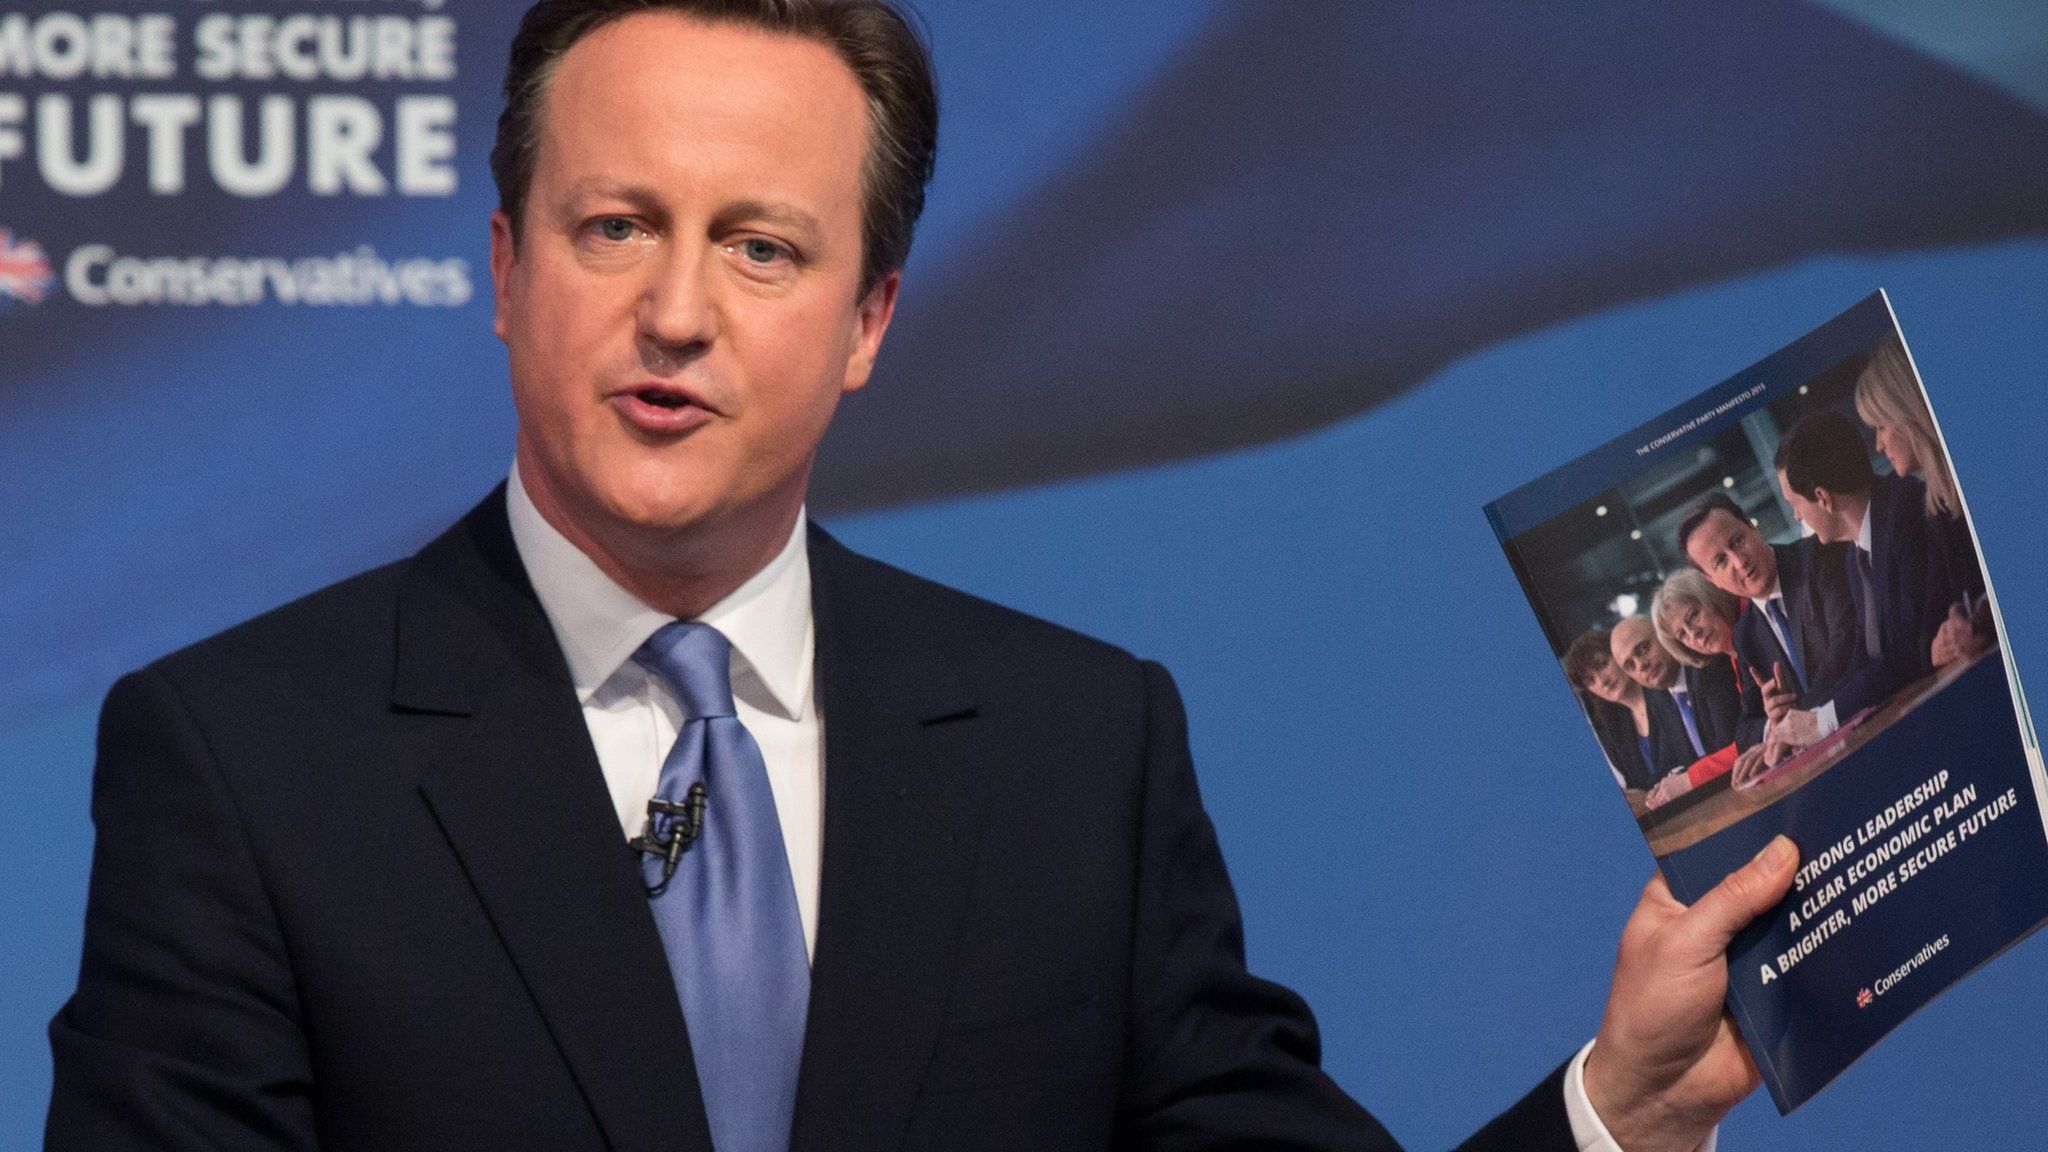 David Cameron with Conservative manifesto 2015